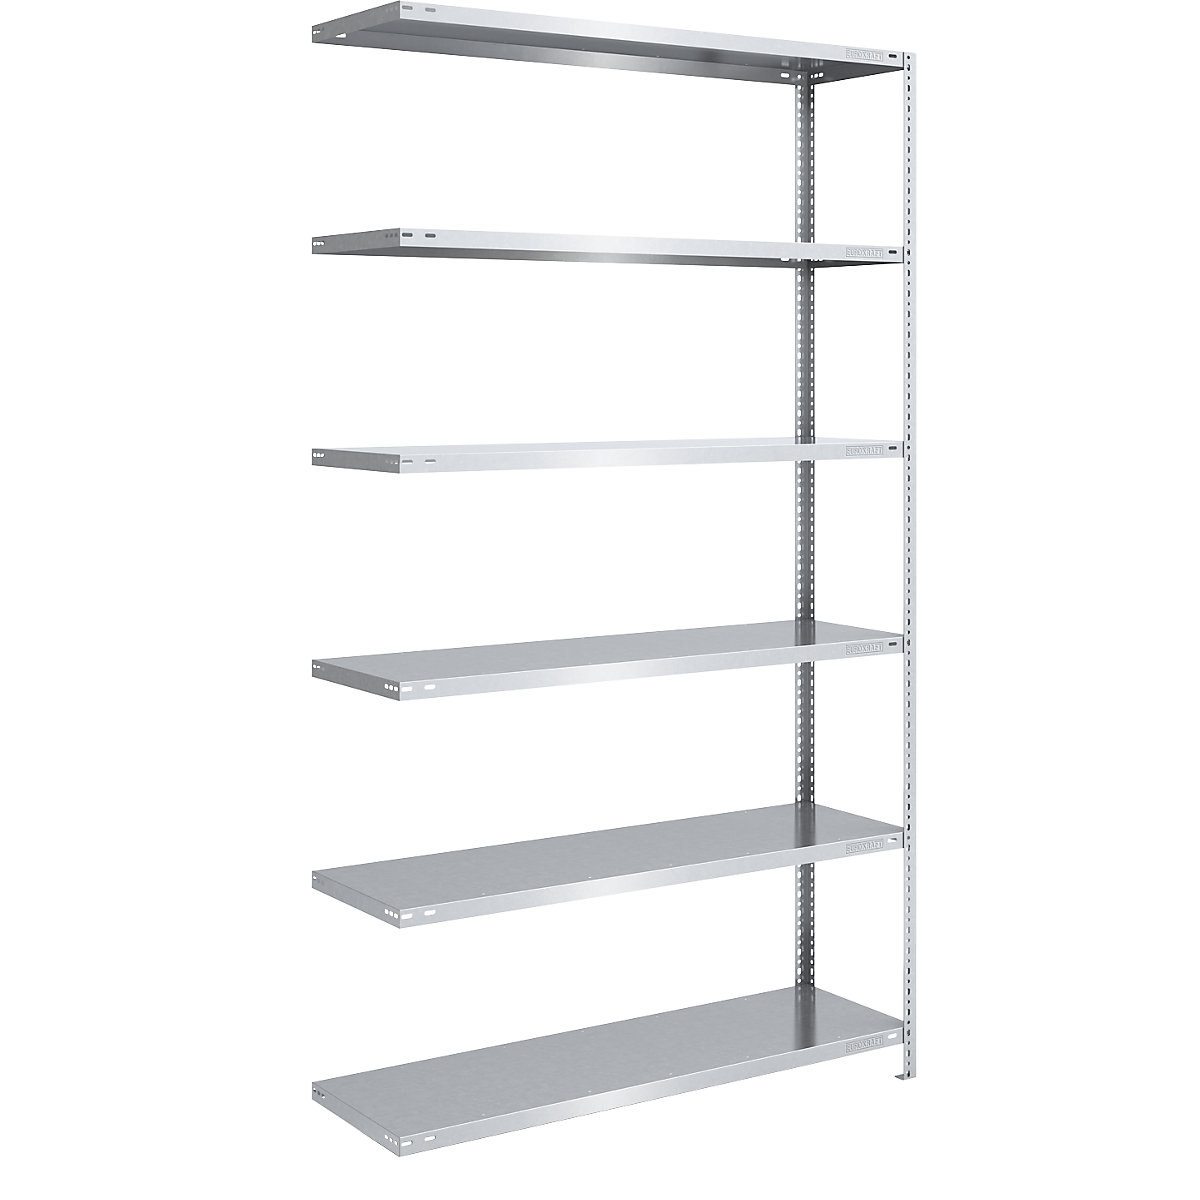 Bolt-together shelf unit, light duty, zinc plated – eurokraft pro, shelf unit height 2500 mm, shelf width 1300 mm, depth 500 mm, extension shelf unit-14